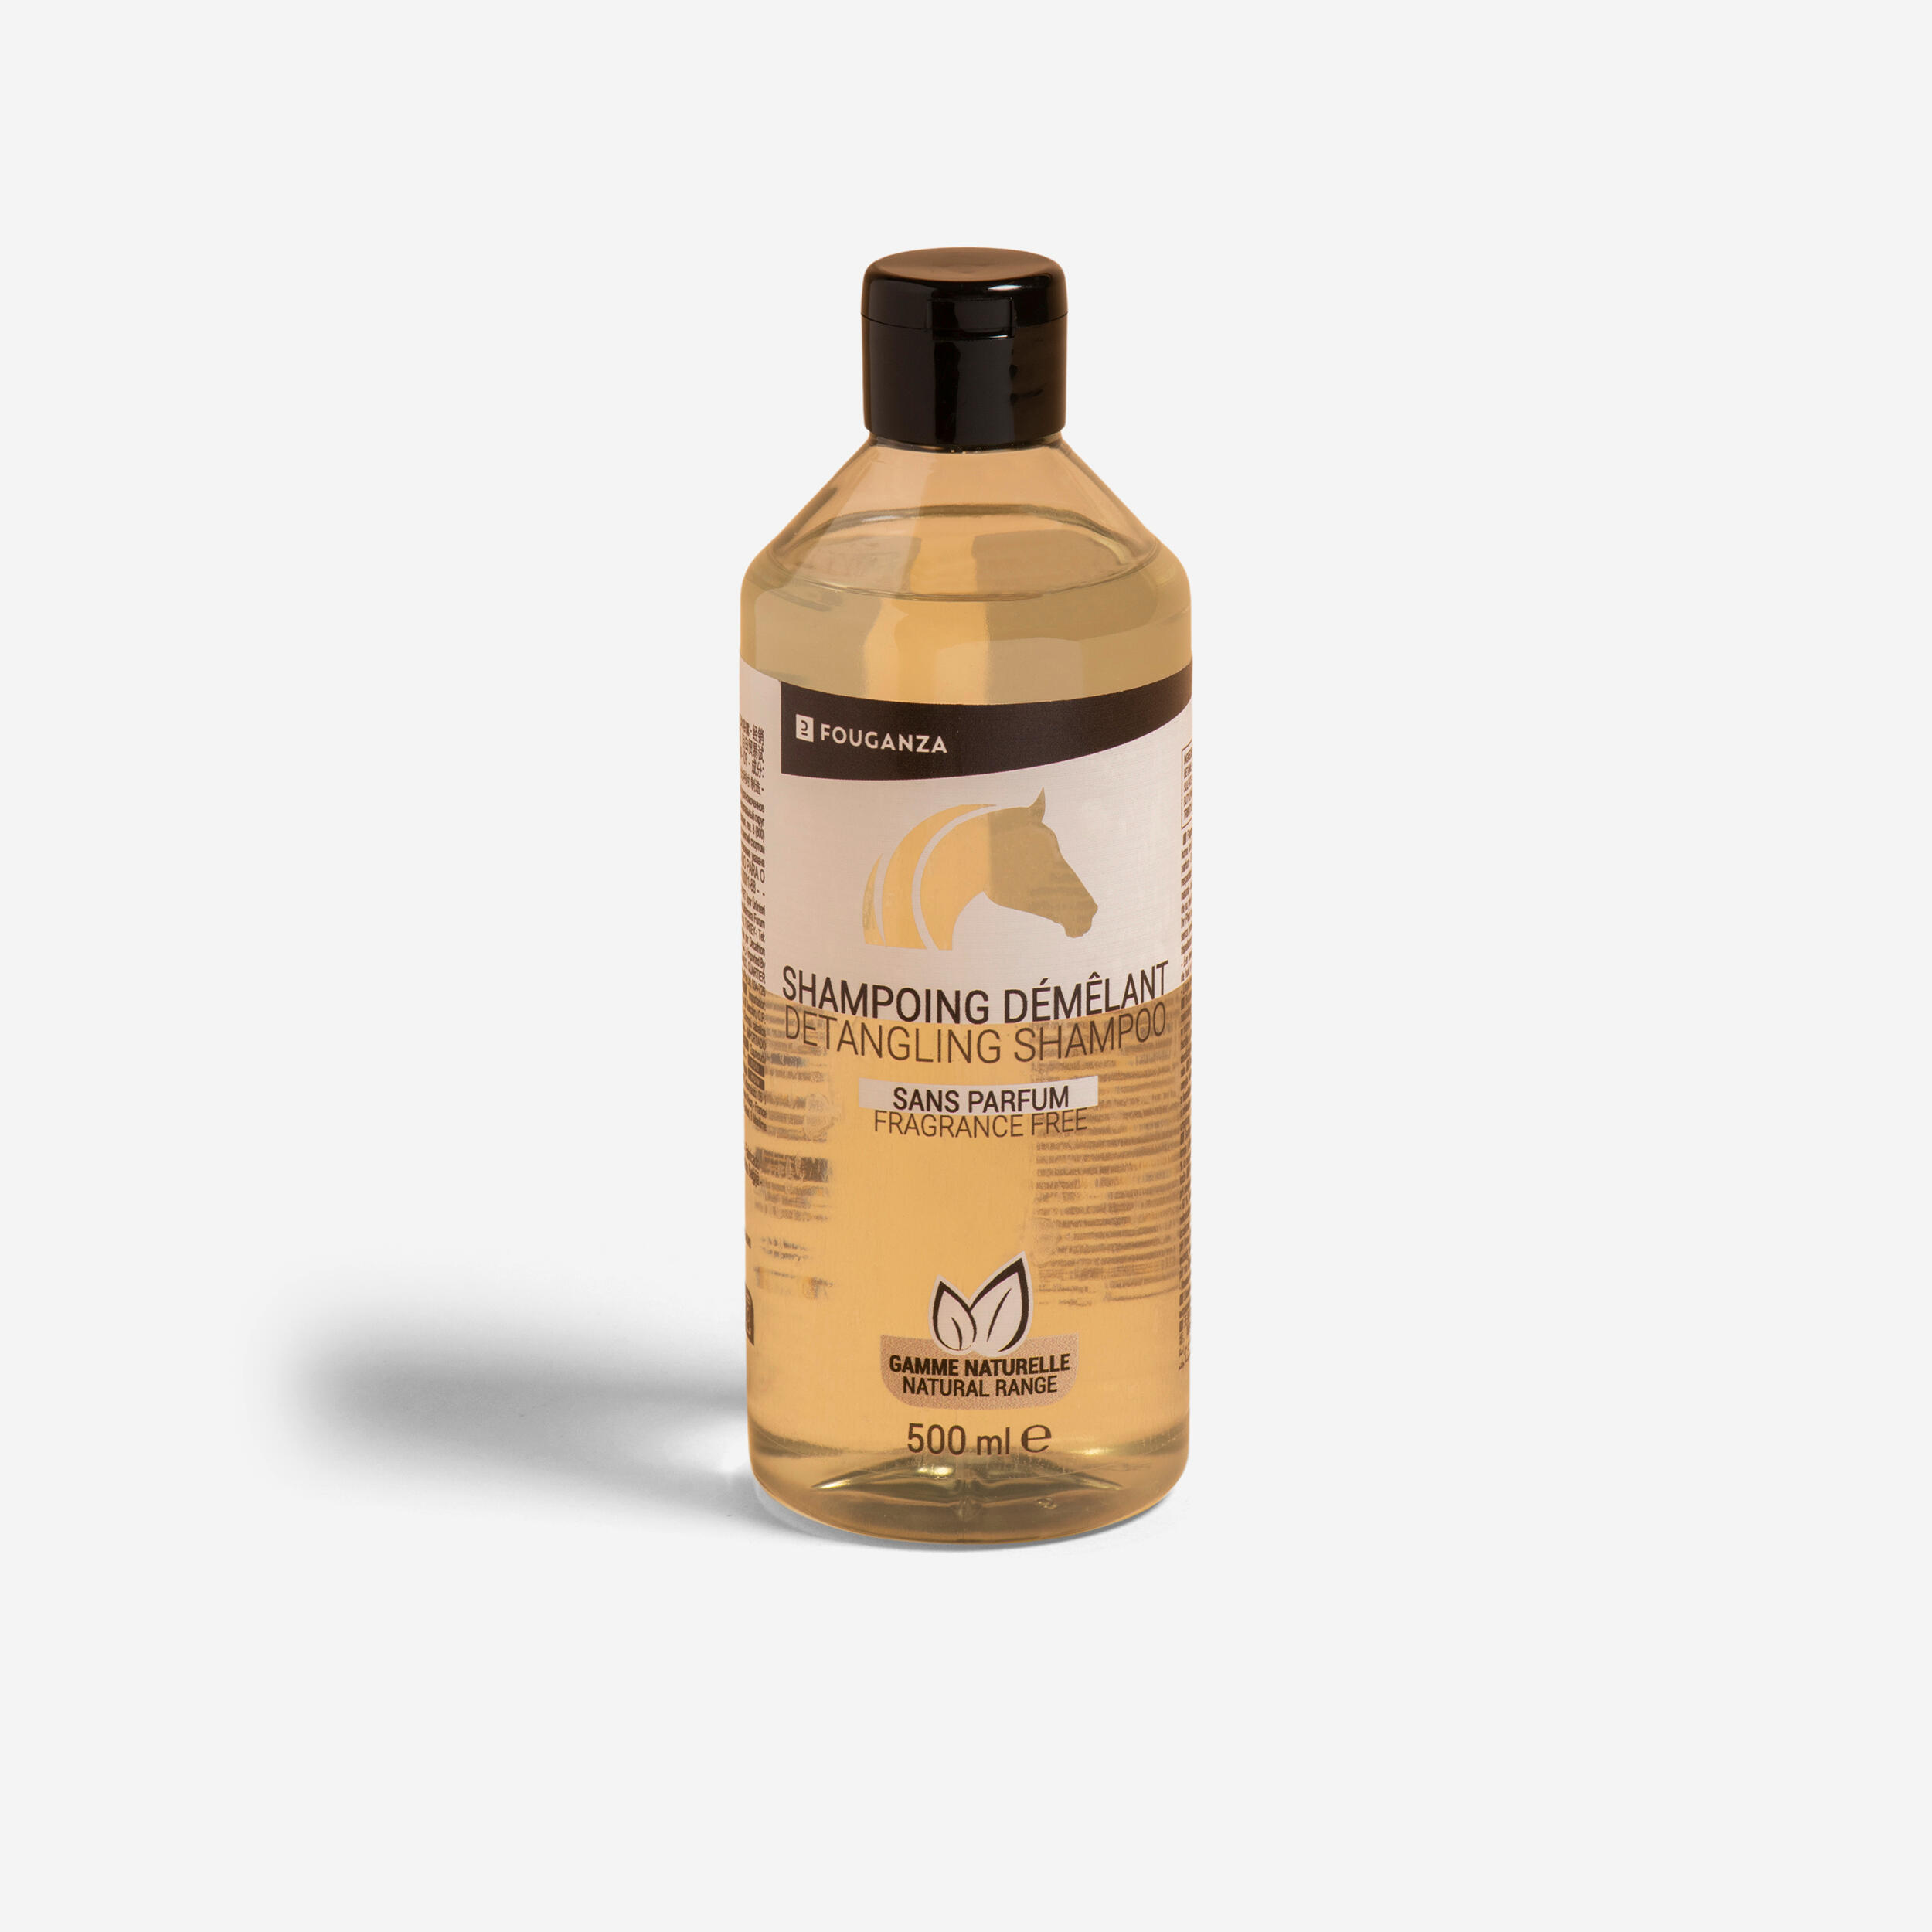 FOUGANZA Horse Riding Detangling Shampoo for Horse & Pony 500ml - Fragrance-Free